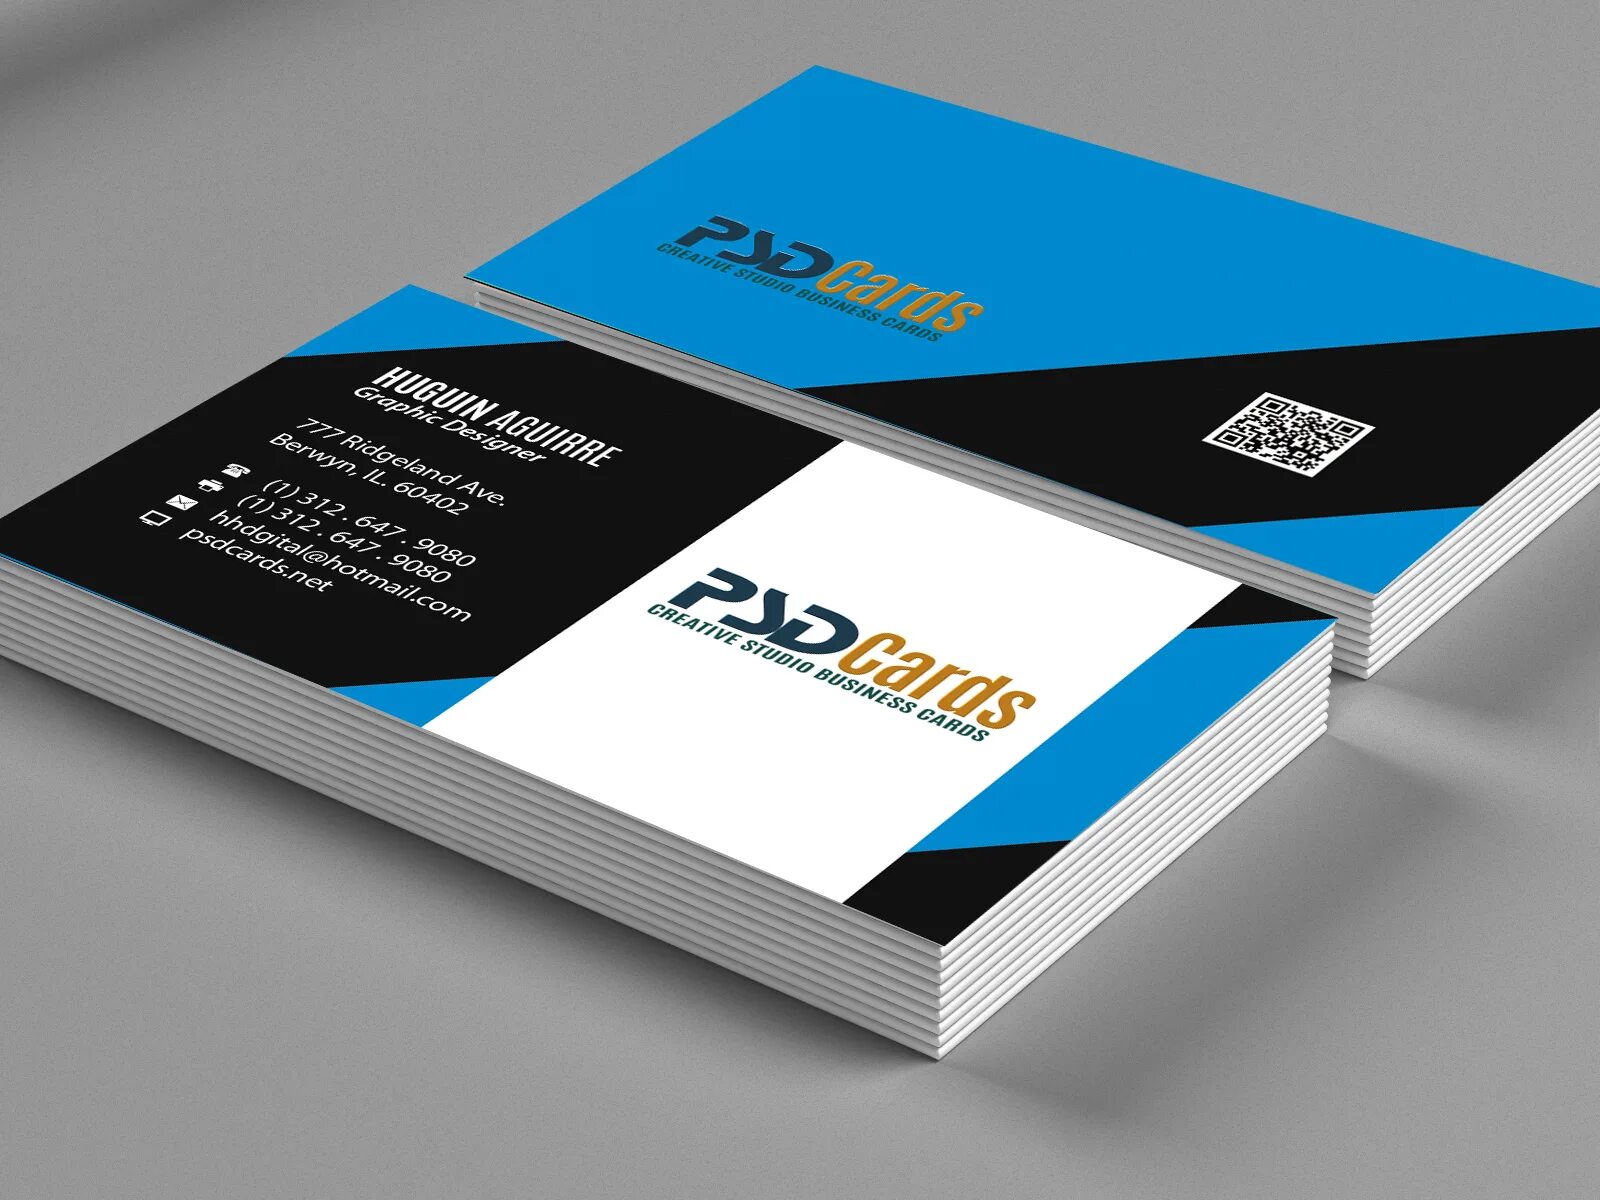 Print cards. Визитная карточка. Professional Business Card Design. Visit Card Design. Визитные карточки шаблоны.